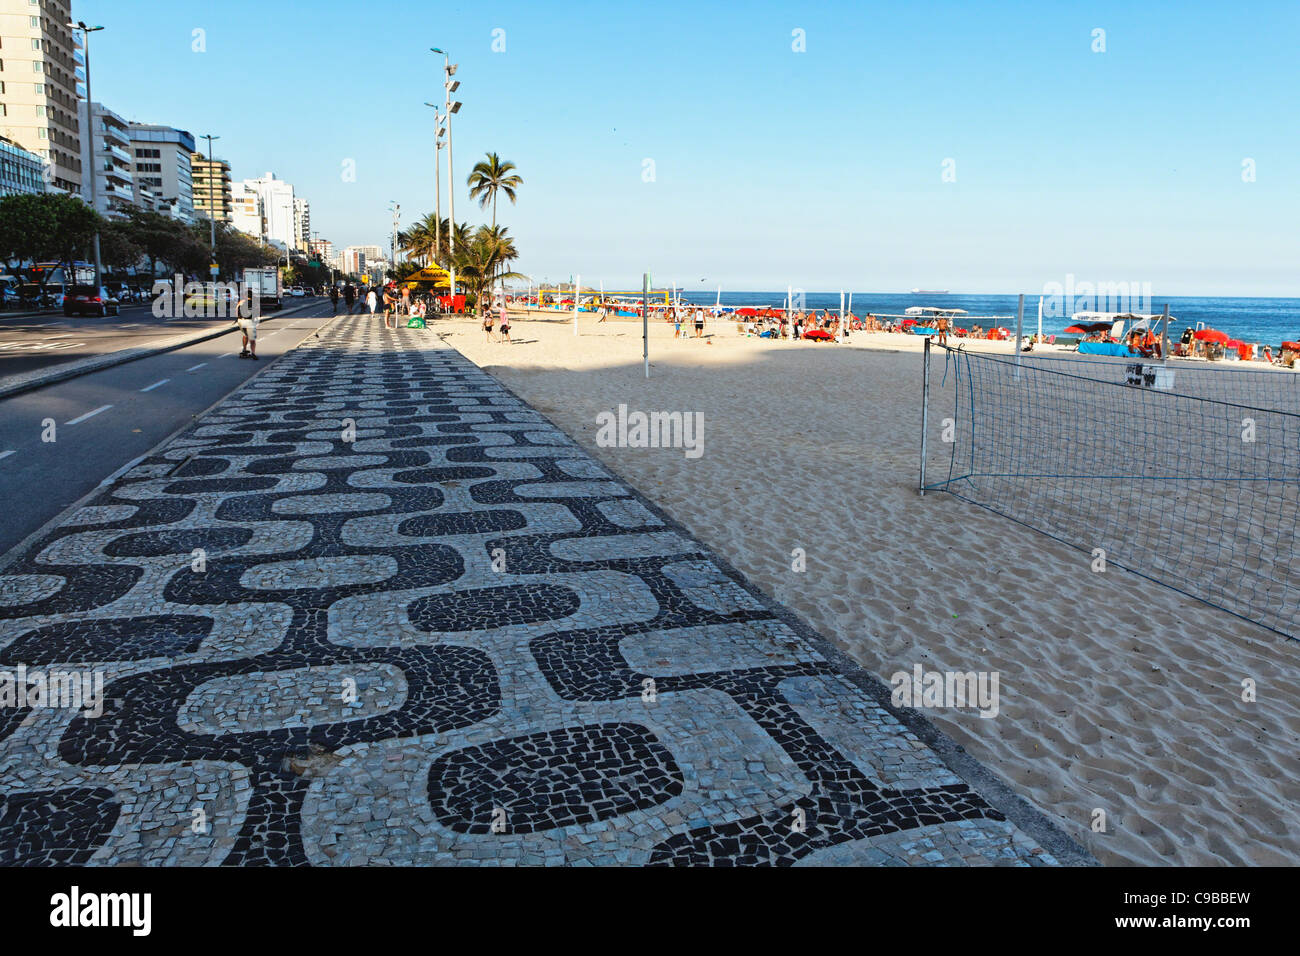 Patterned Walkway of Ipanema Beach, Rio de Janeiro, Brazil Stock Photo